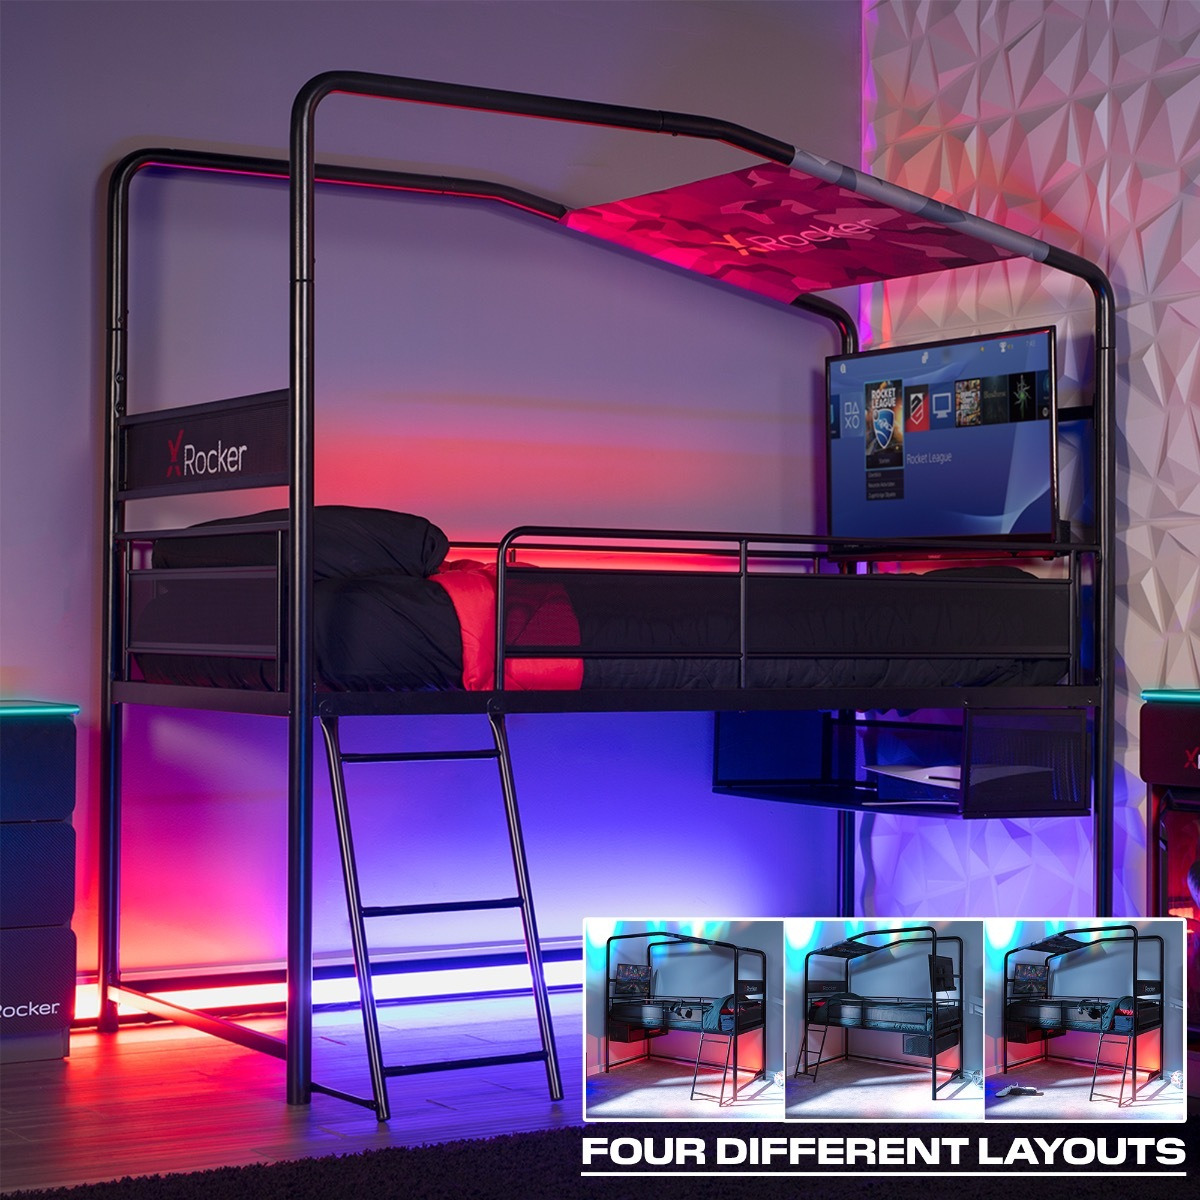 X Rocker Contra Gaming Mid Sleeper Reversible Gaming Bunk Bed - Black - image 1